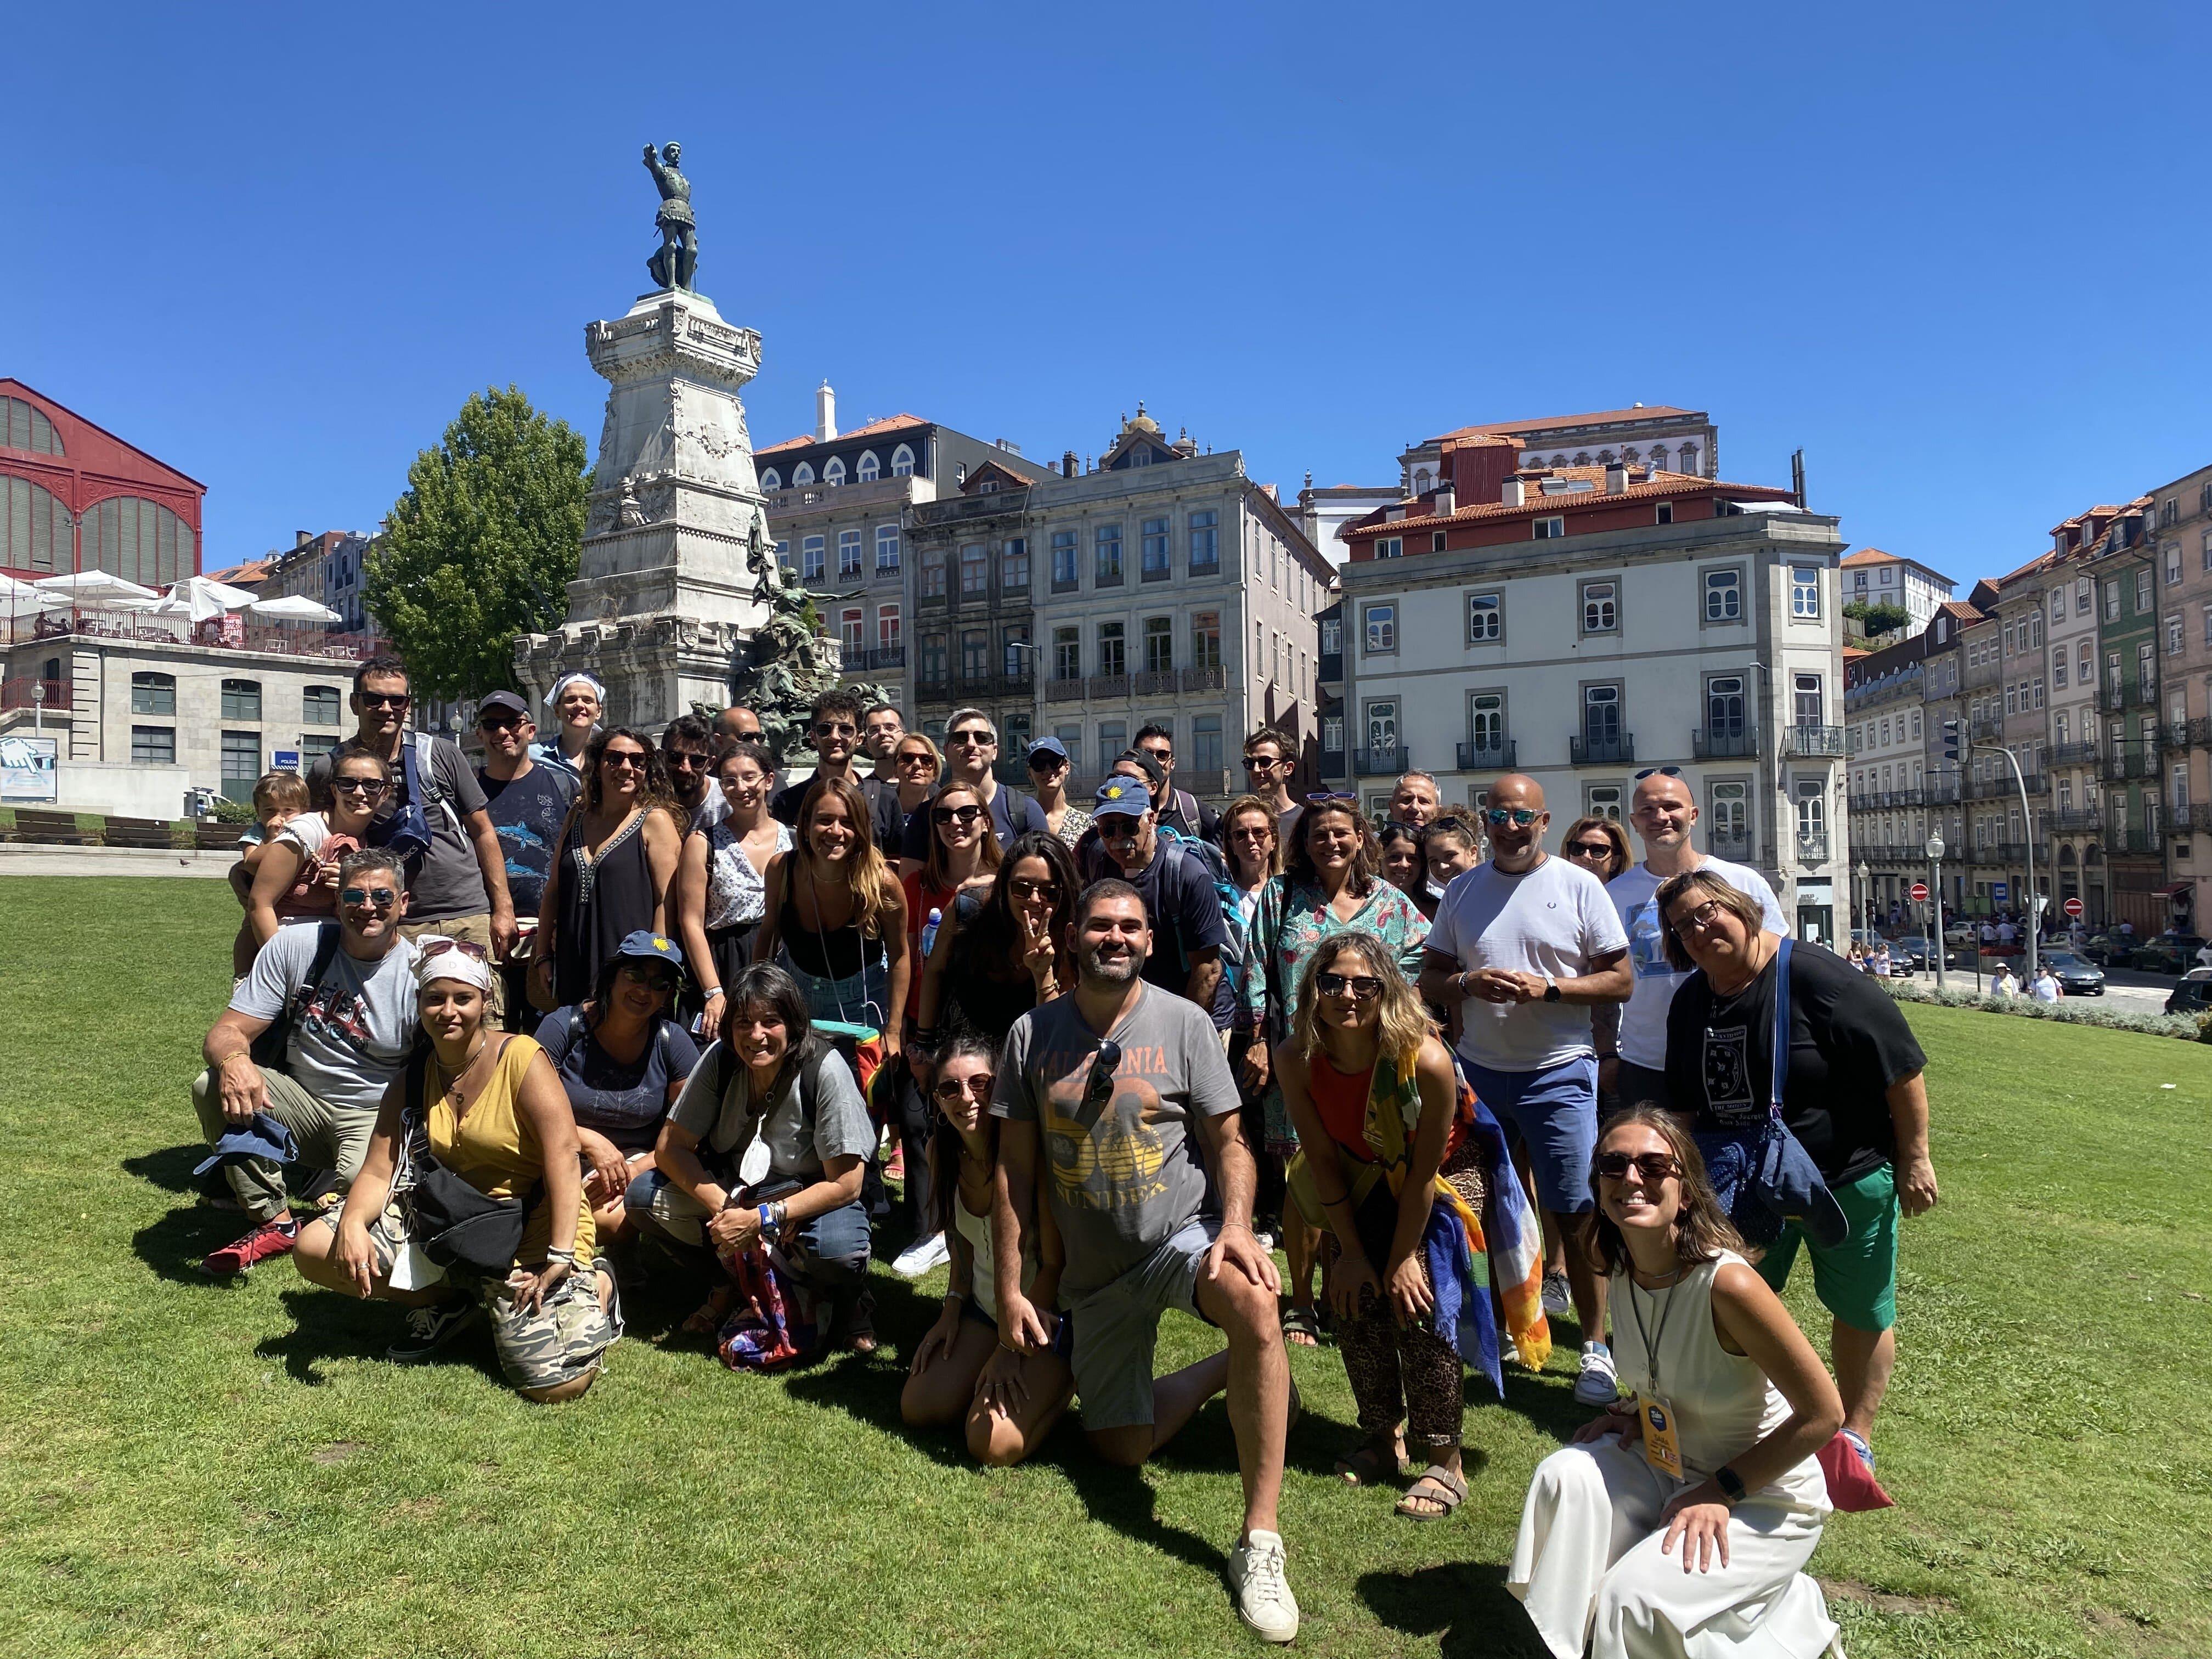 Porto Free Walking Tour: The Unvanquished City